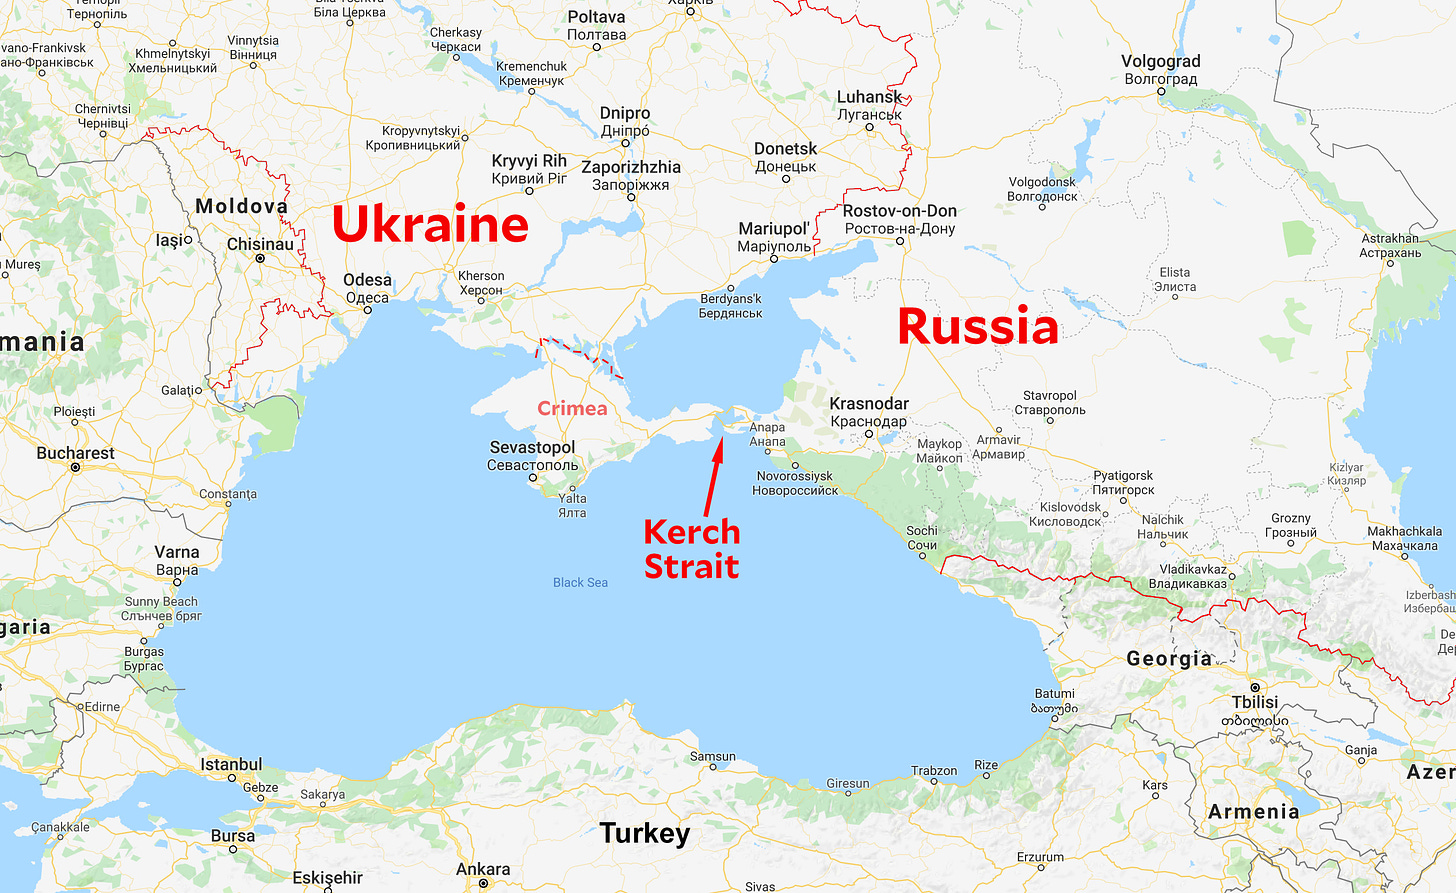 So What Happened in the Kerch Strait? - Mother Jones